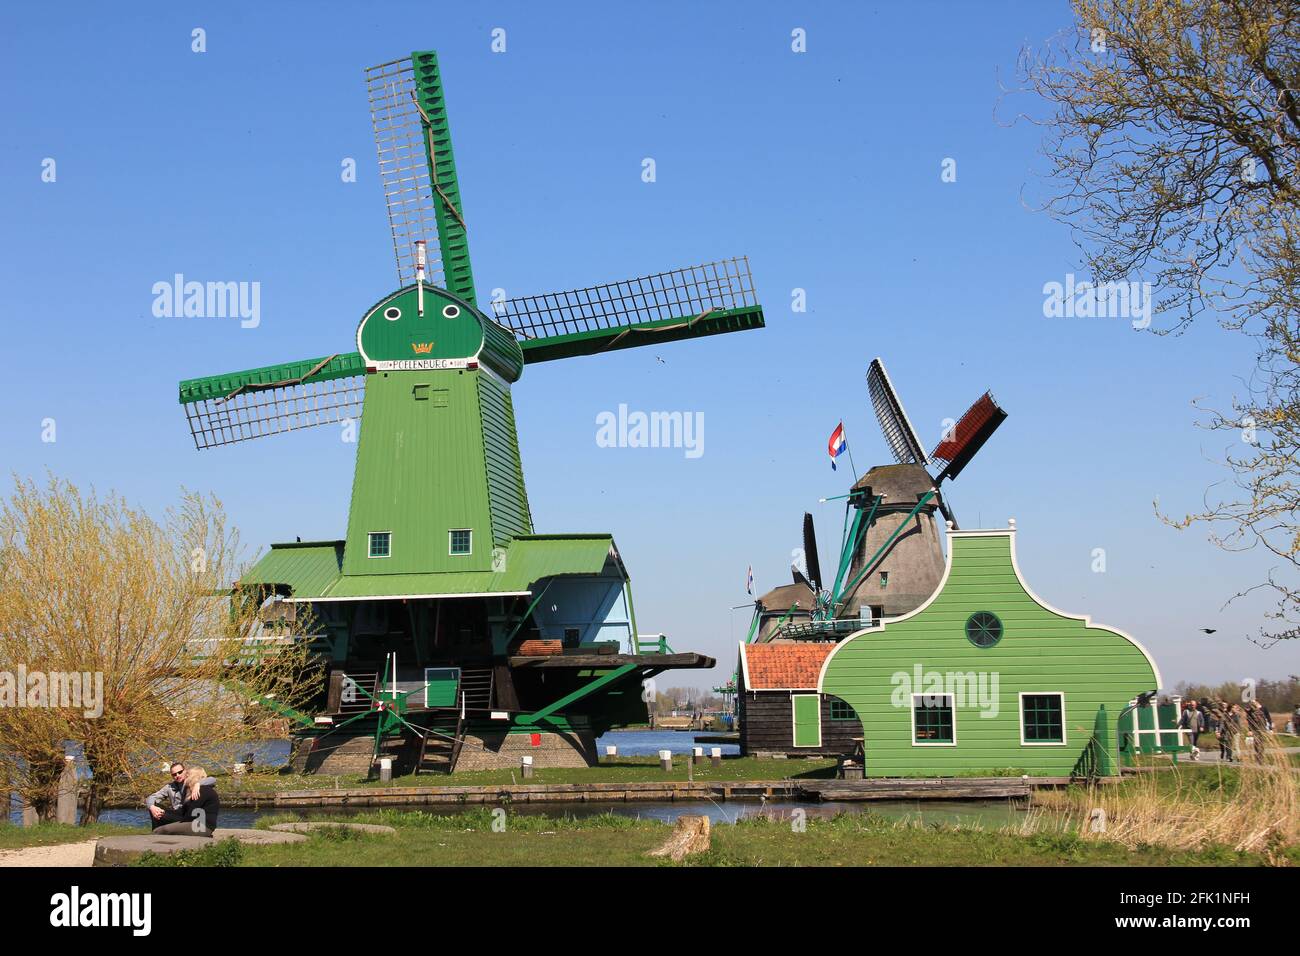 Zaanse Schans in the Netherlands Stock Photo